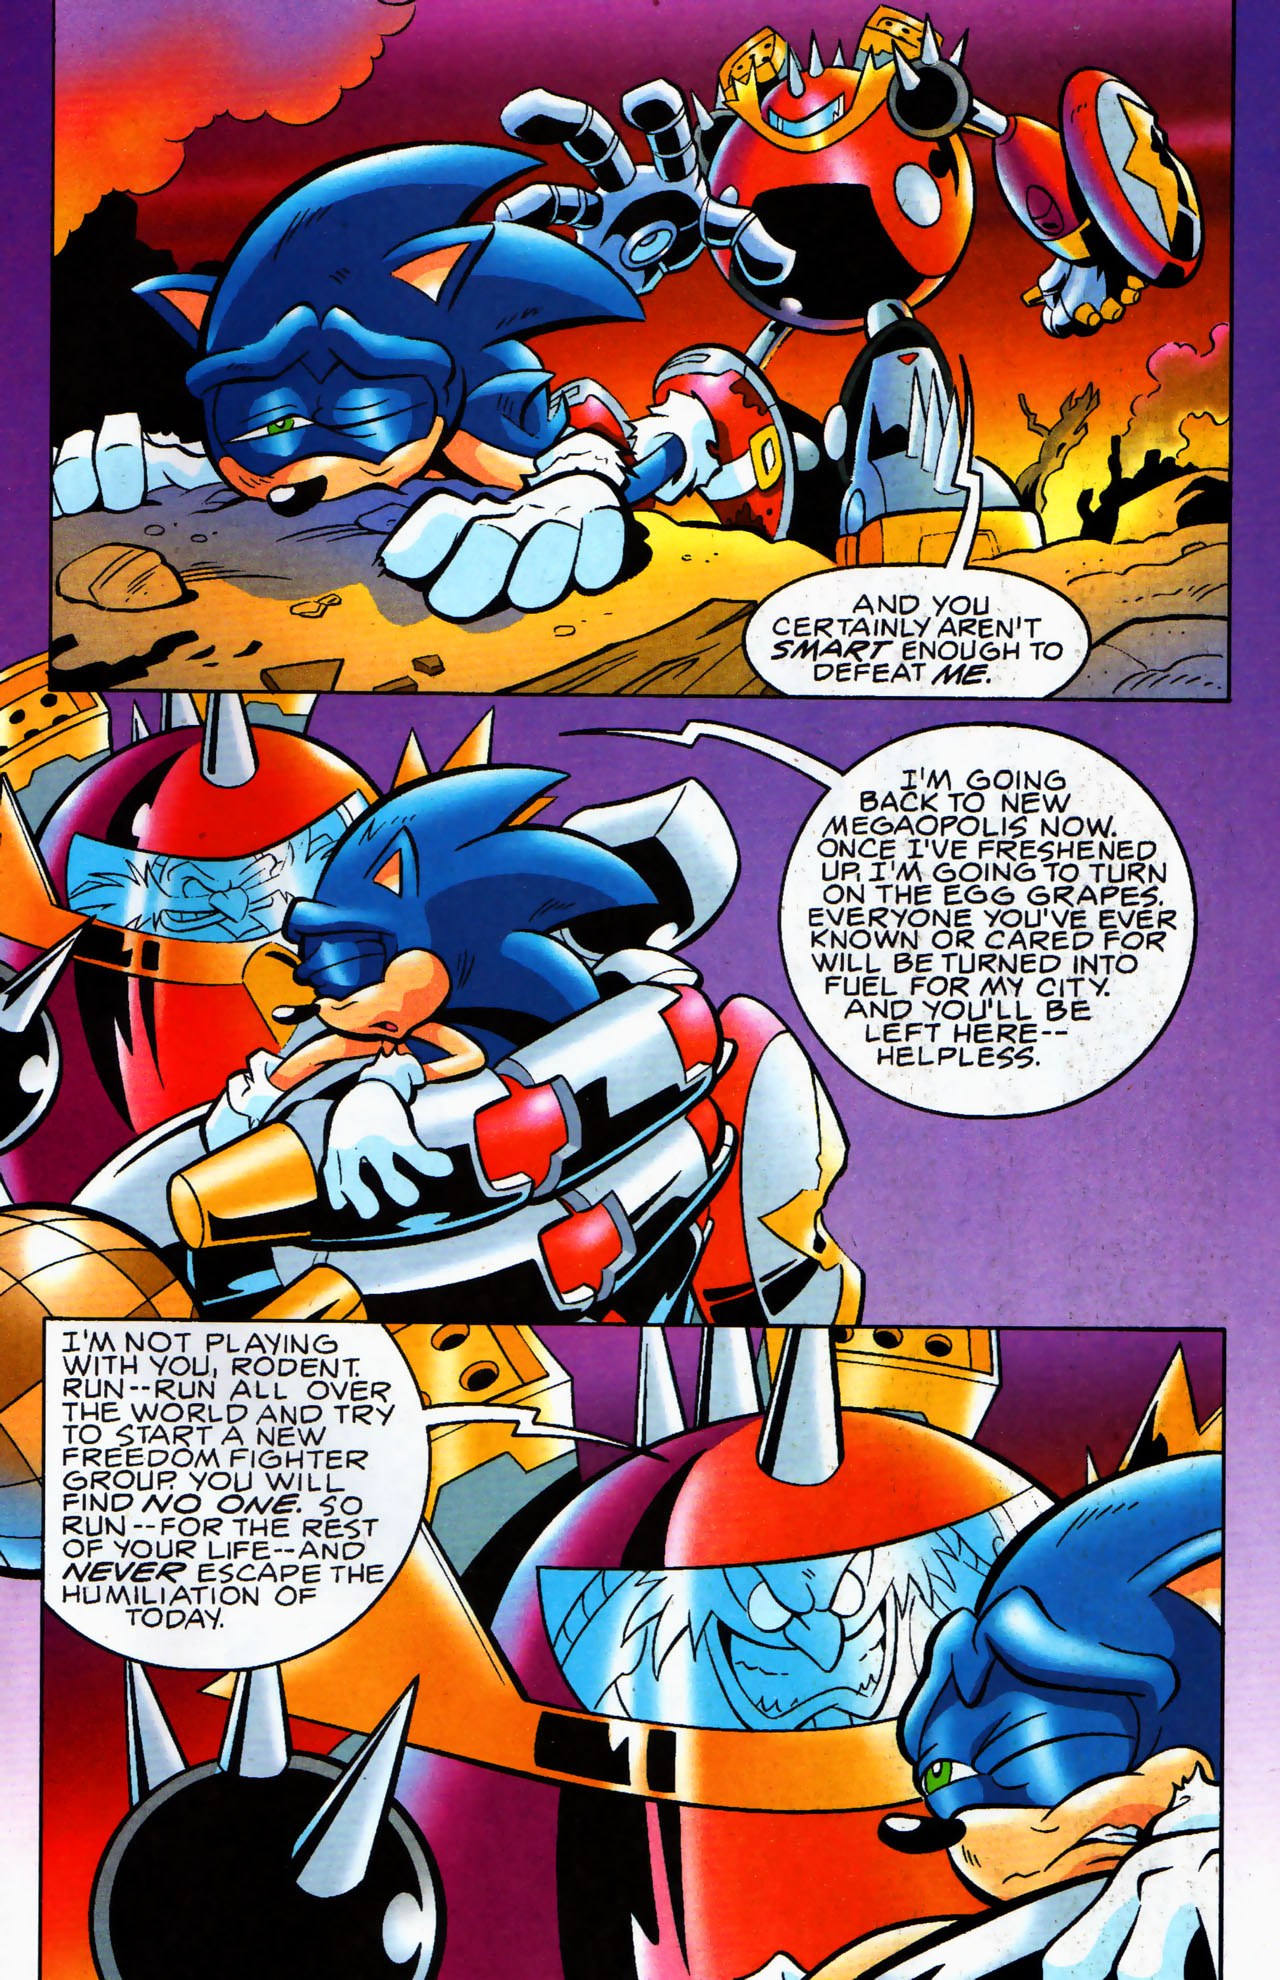 Sonic the Hedgehog - Eggman Empire / Characters - TV Tropes